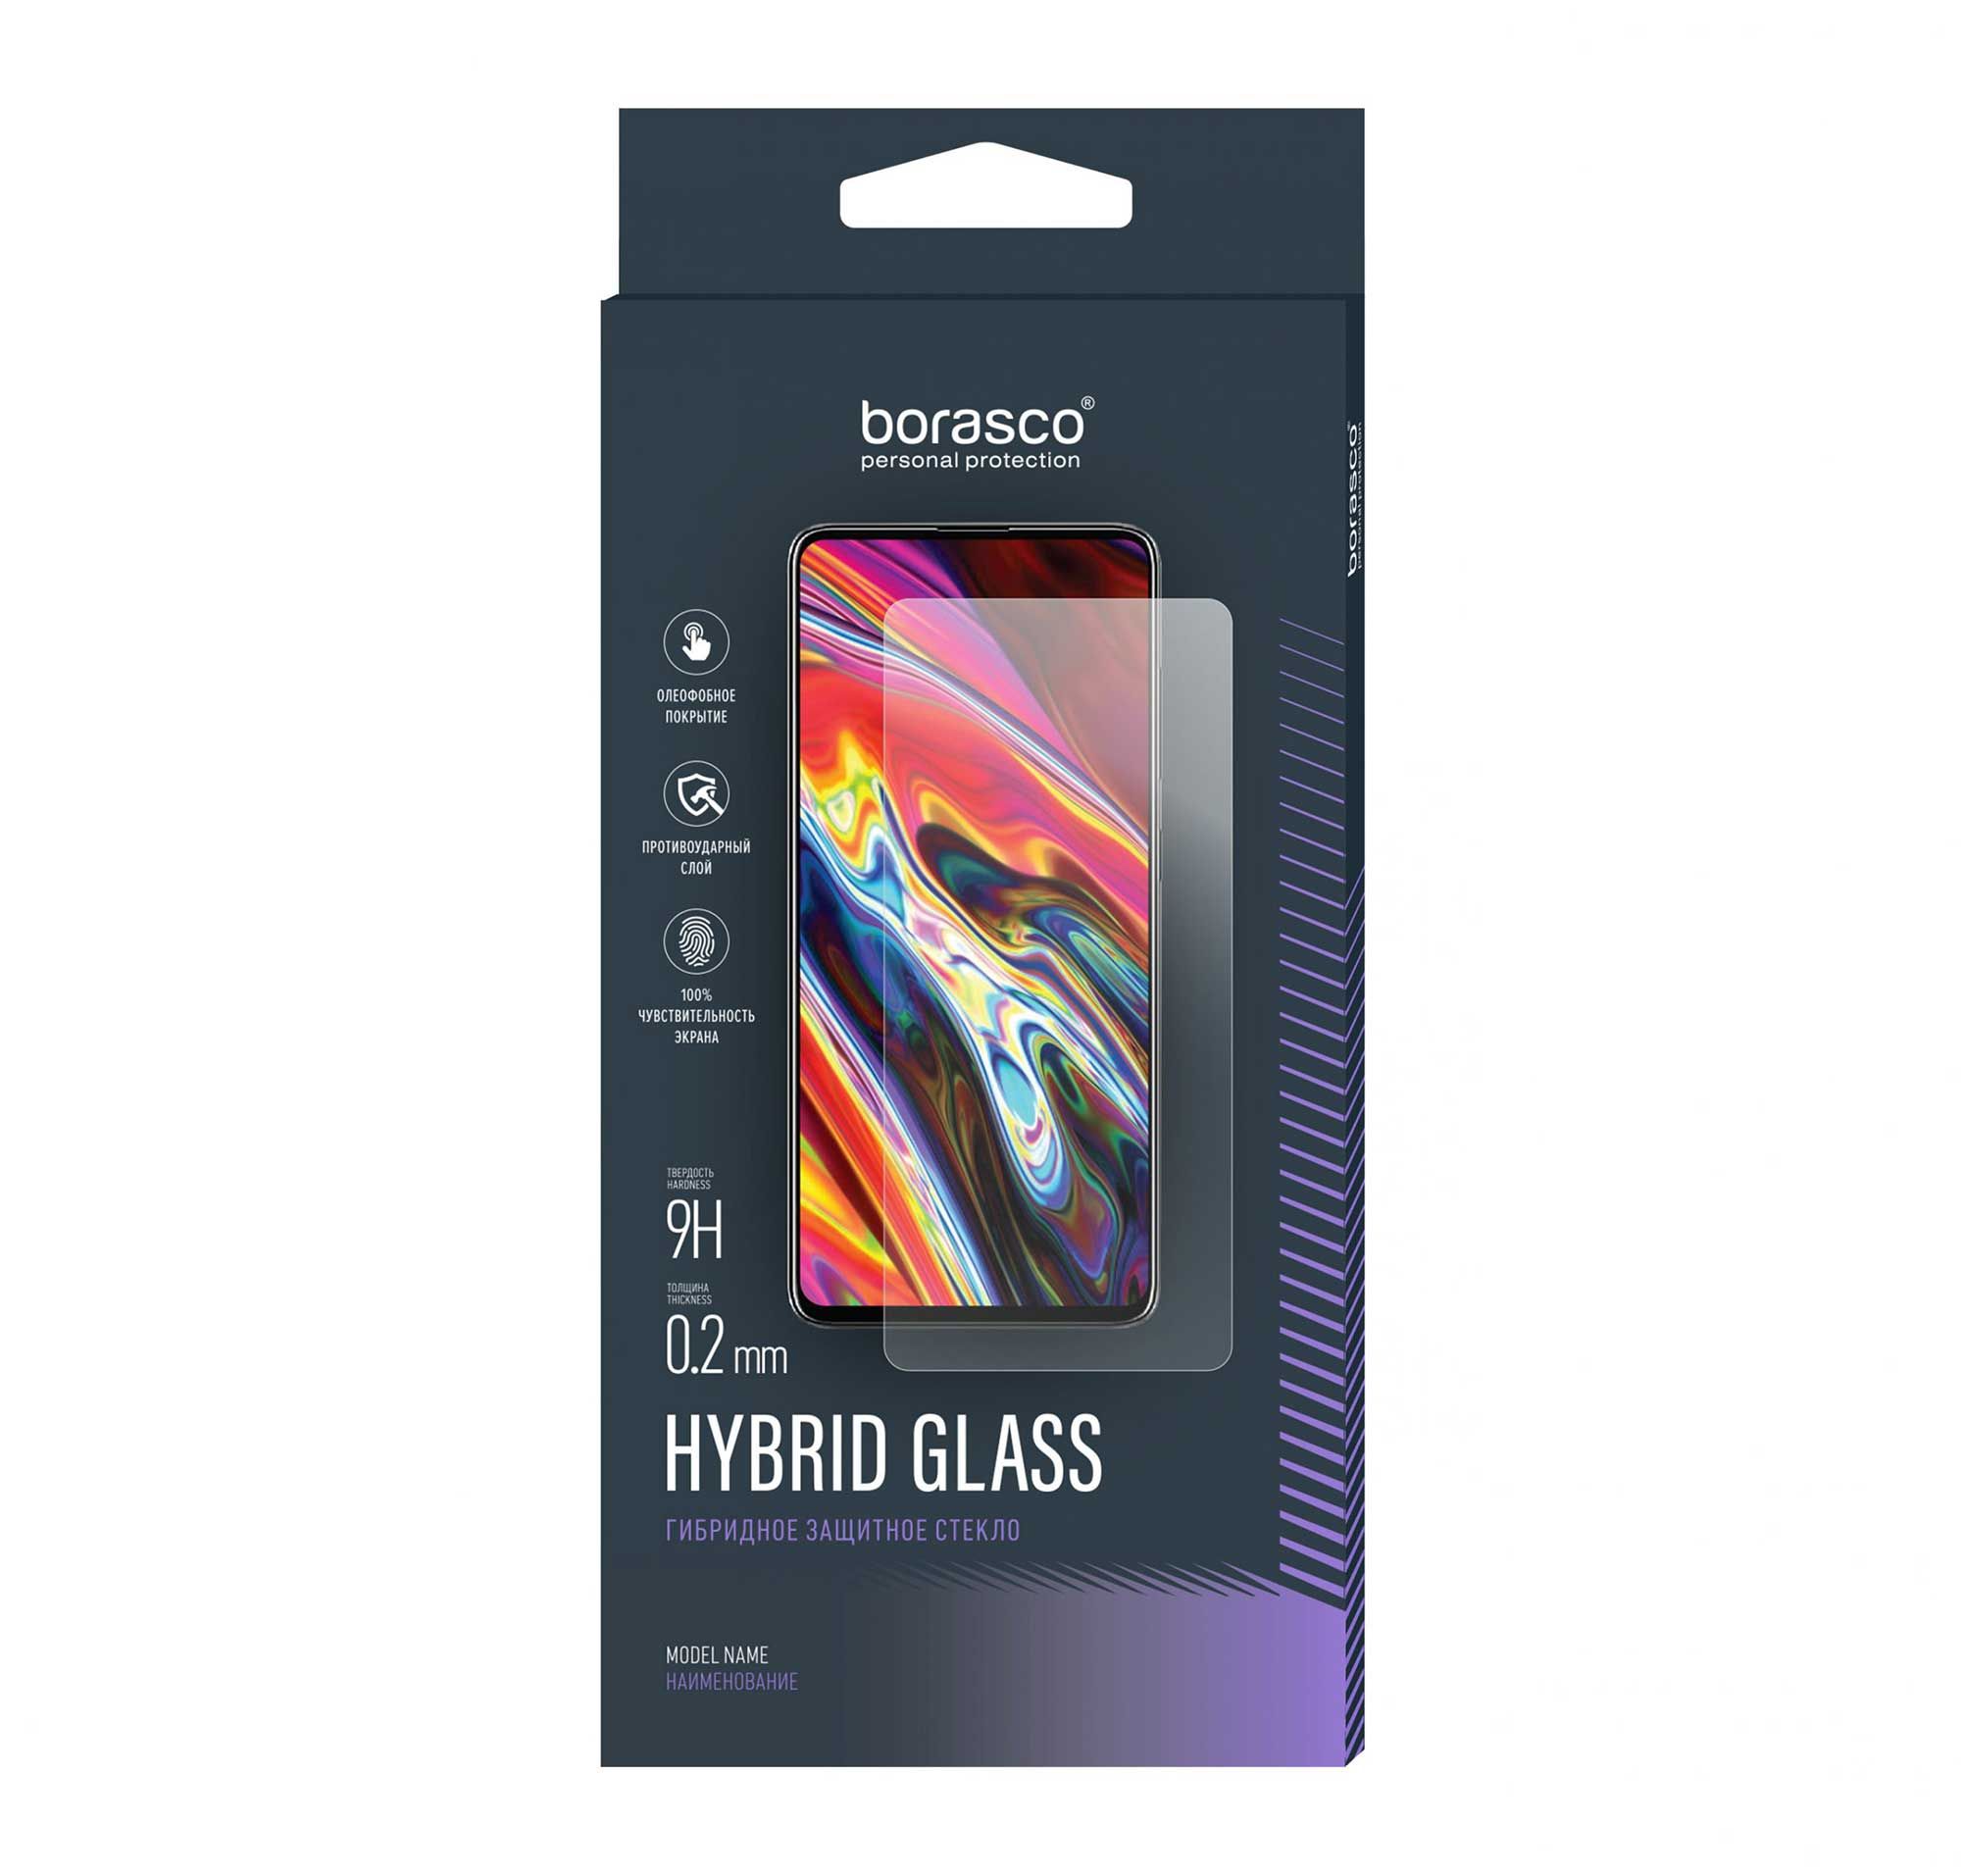 Защитное стекло Hybrid Glass для Sony Xperia 1 III защитное стекло на sony xperia xz2 compact